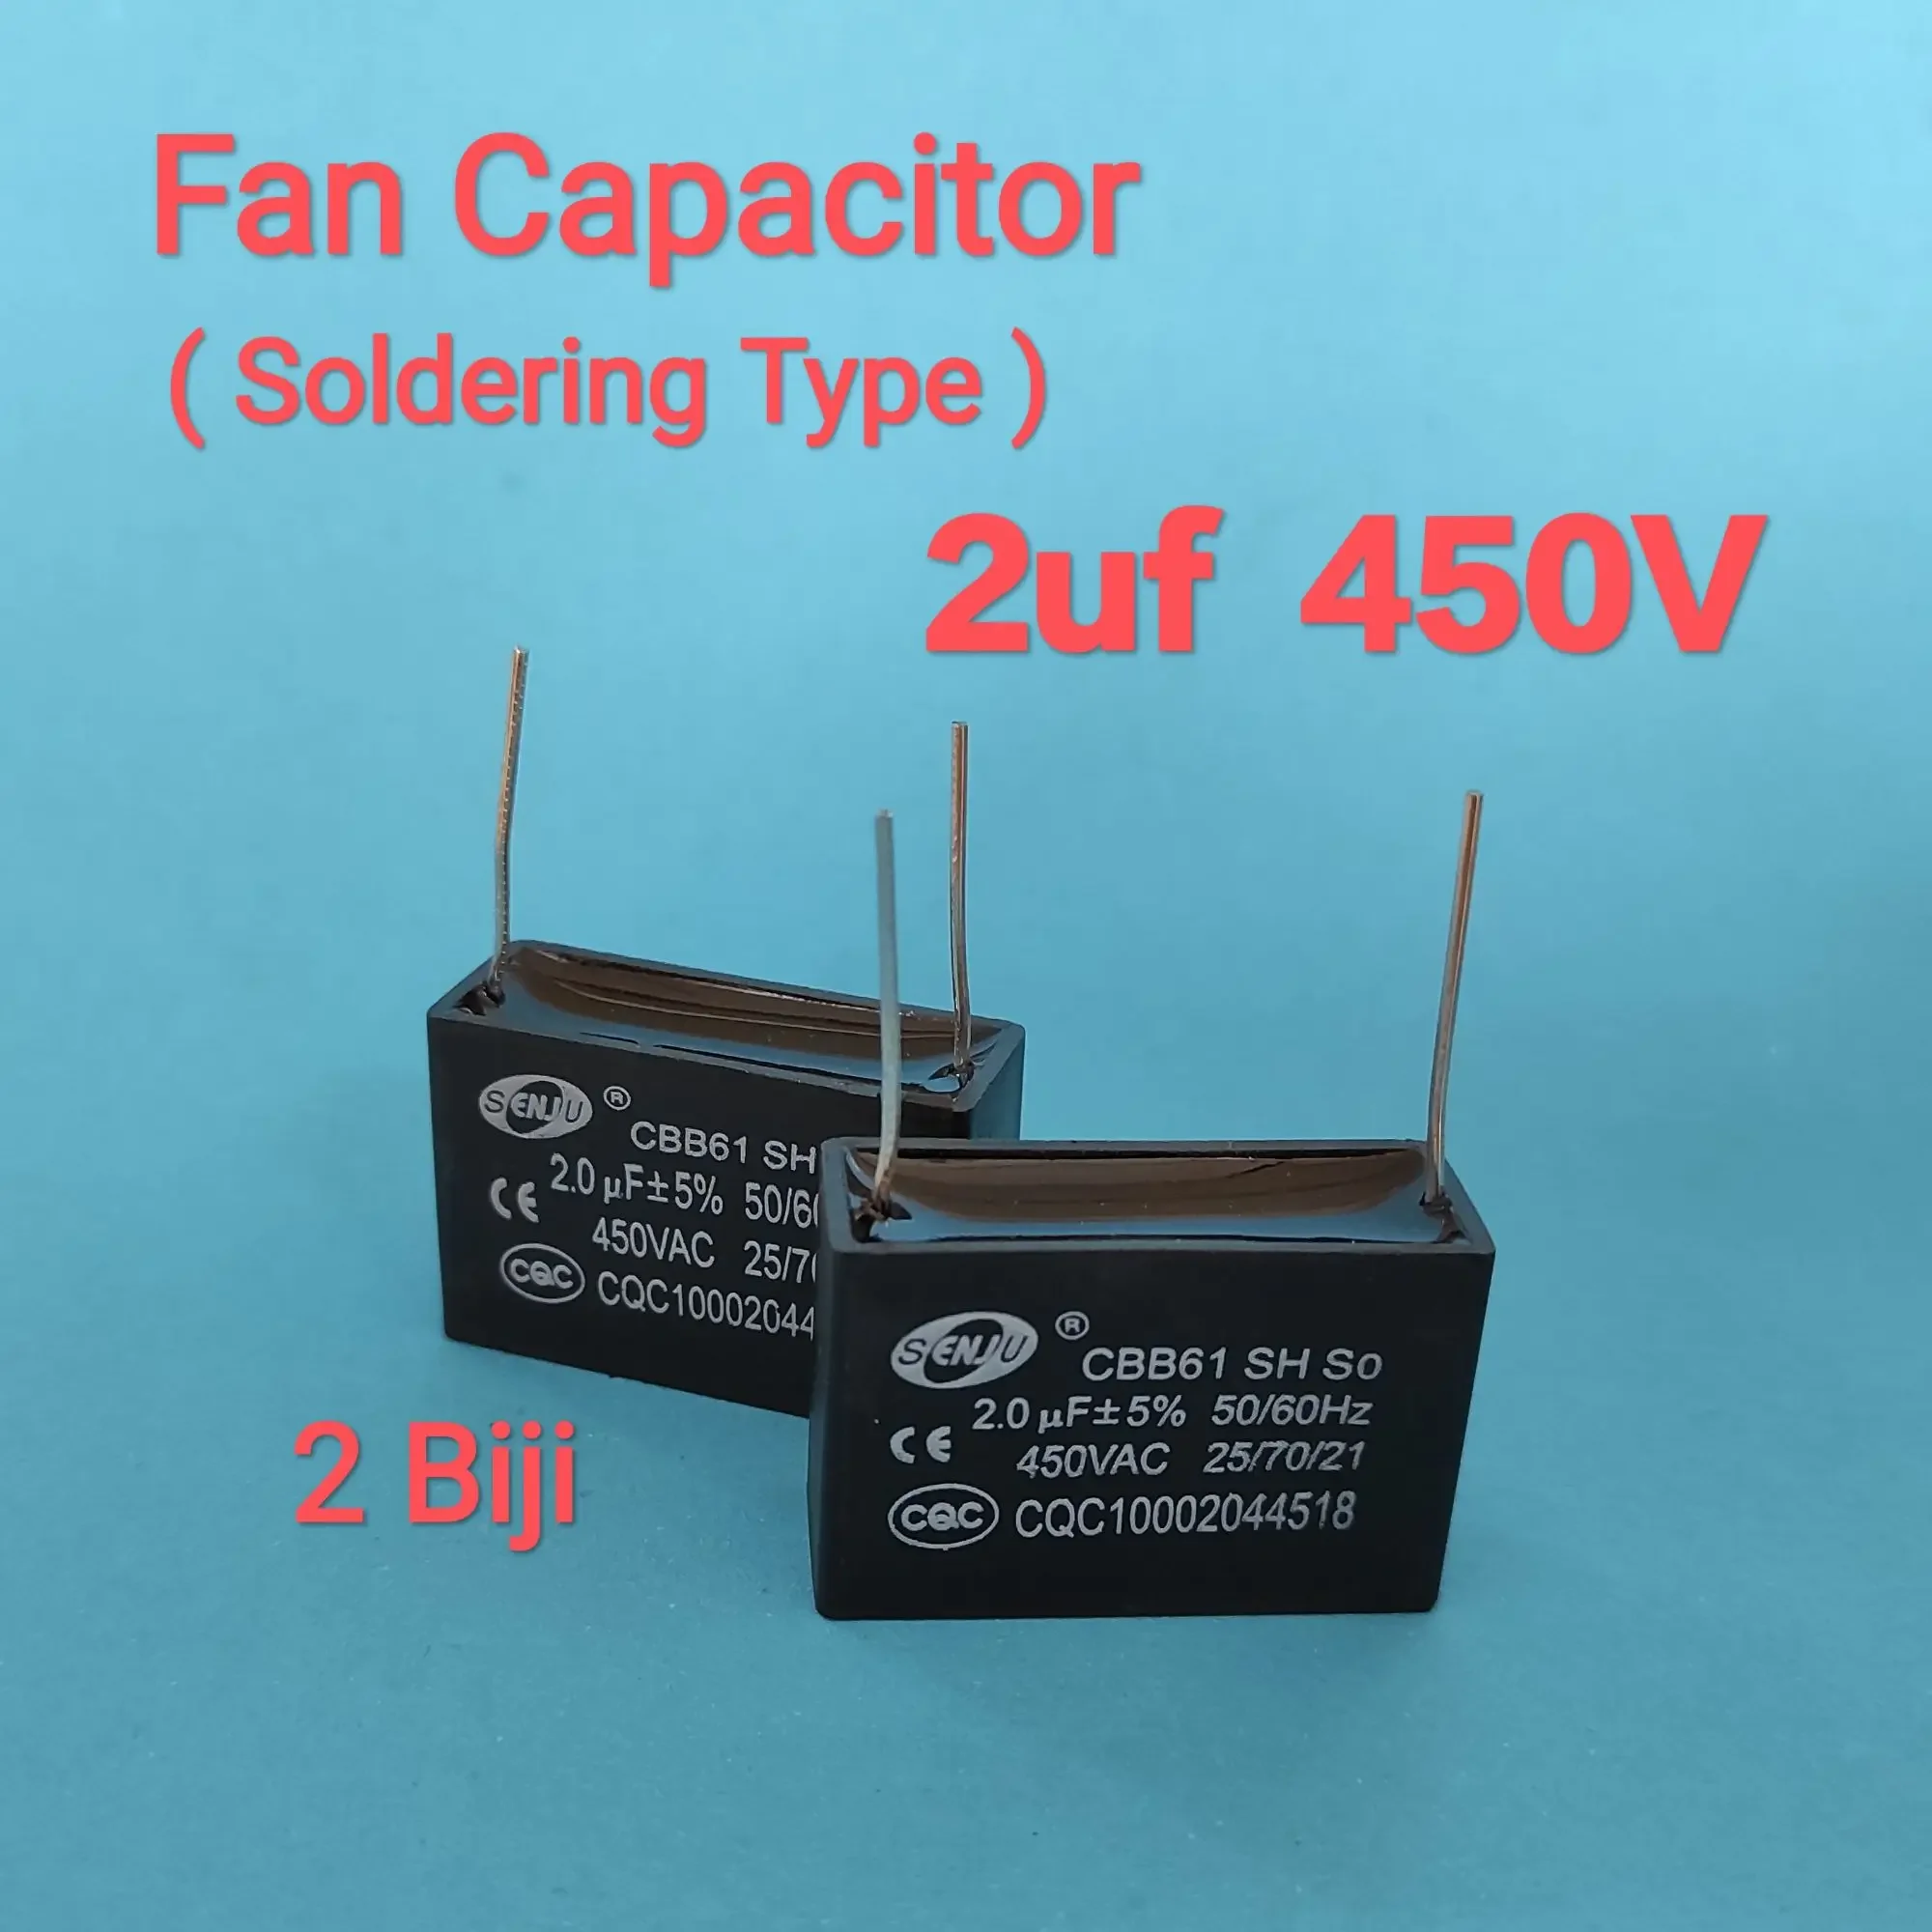 2 biji 2uf 450v Fan capacitor pcb board capacitor alpha elmark